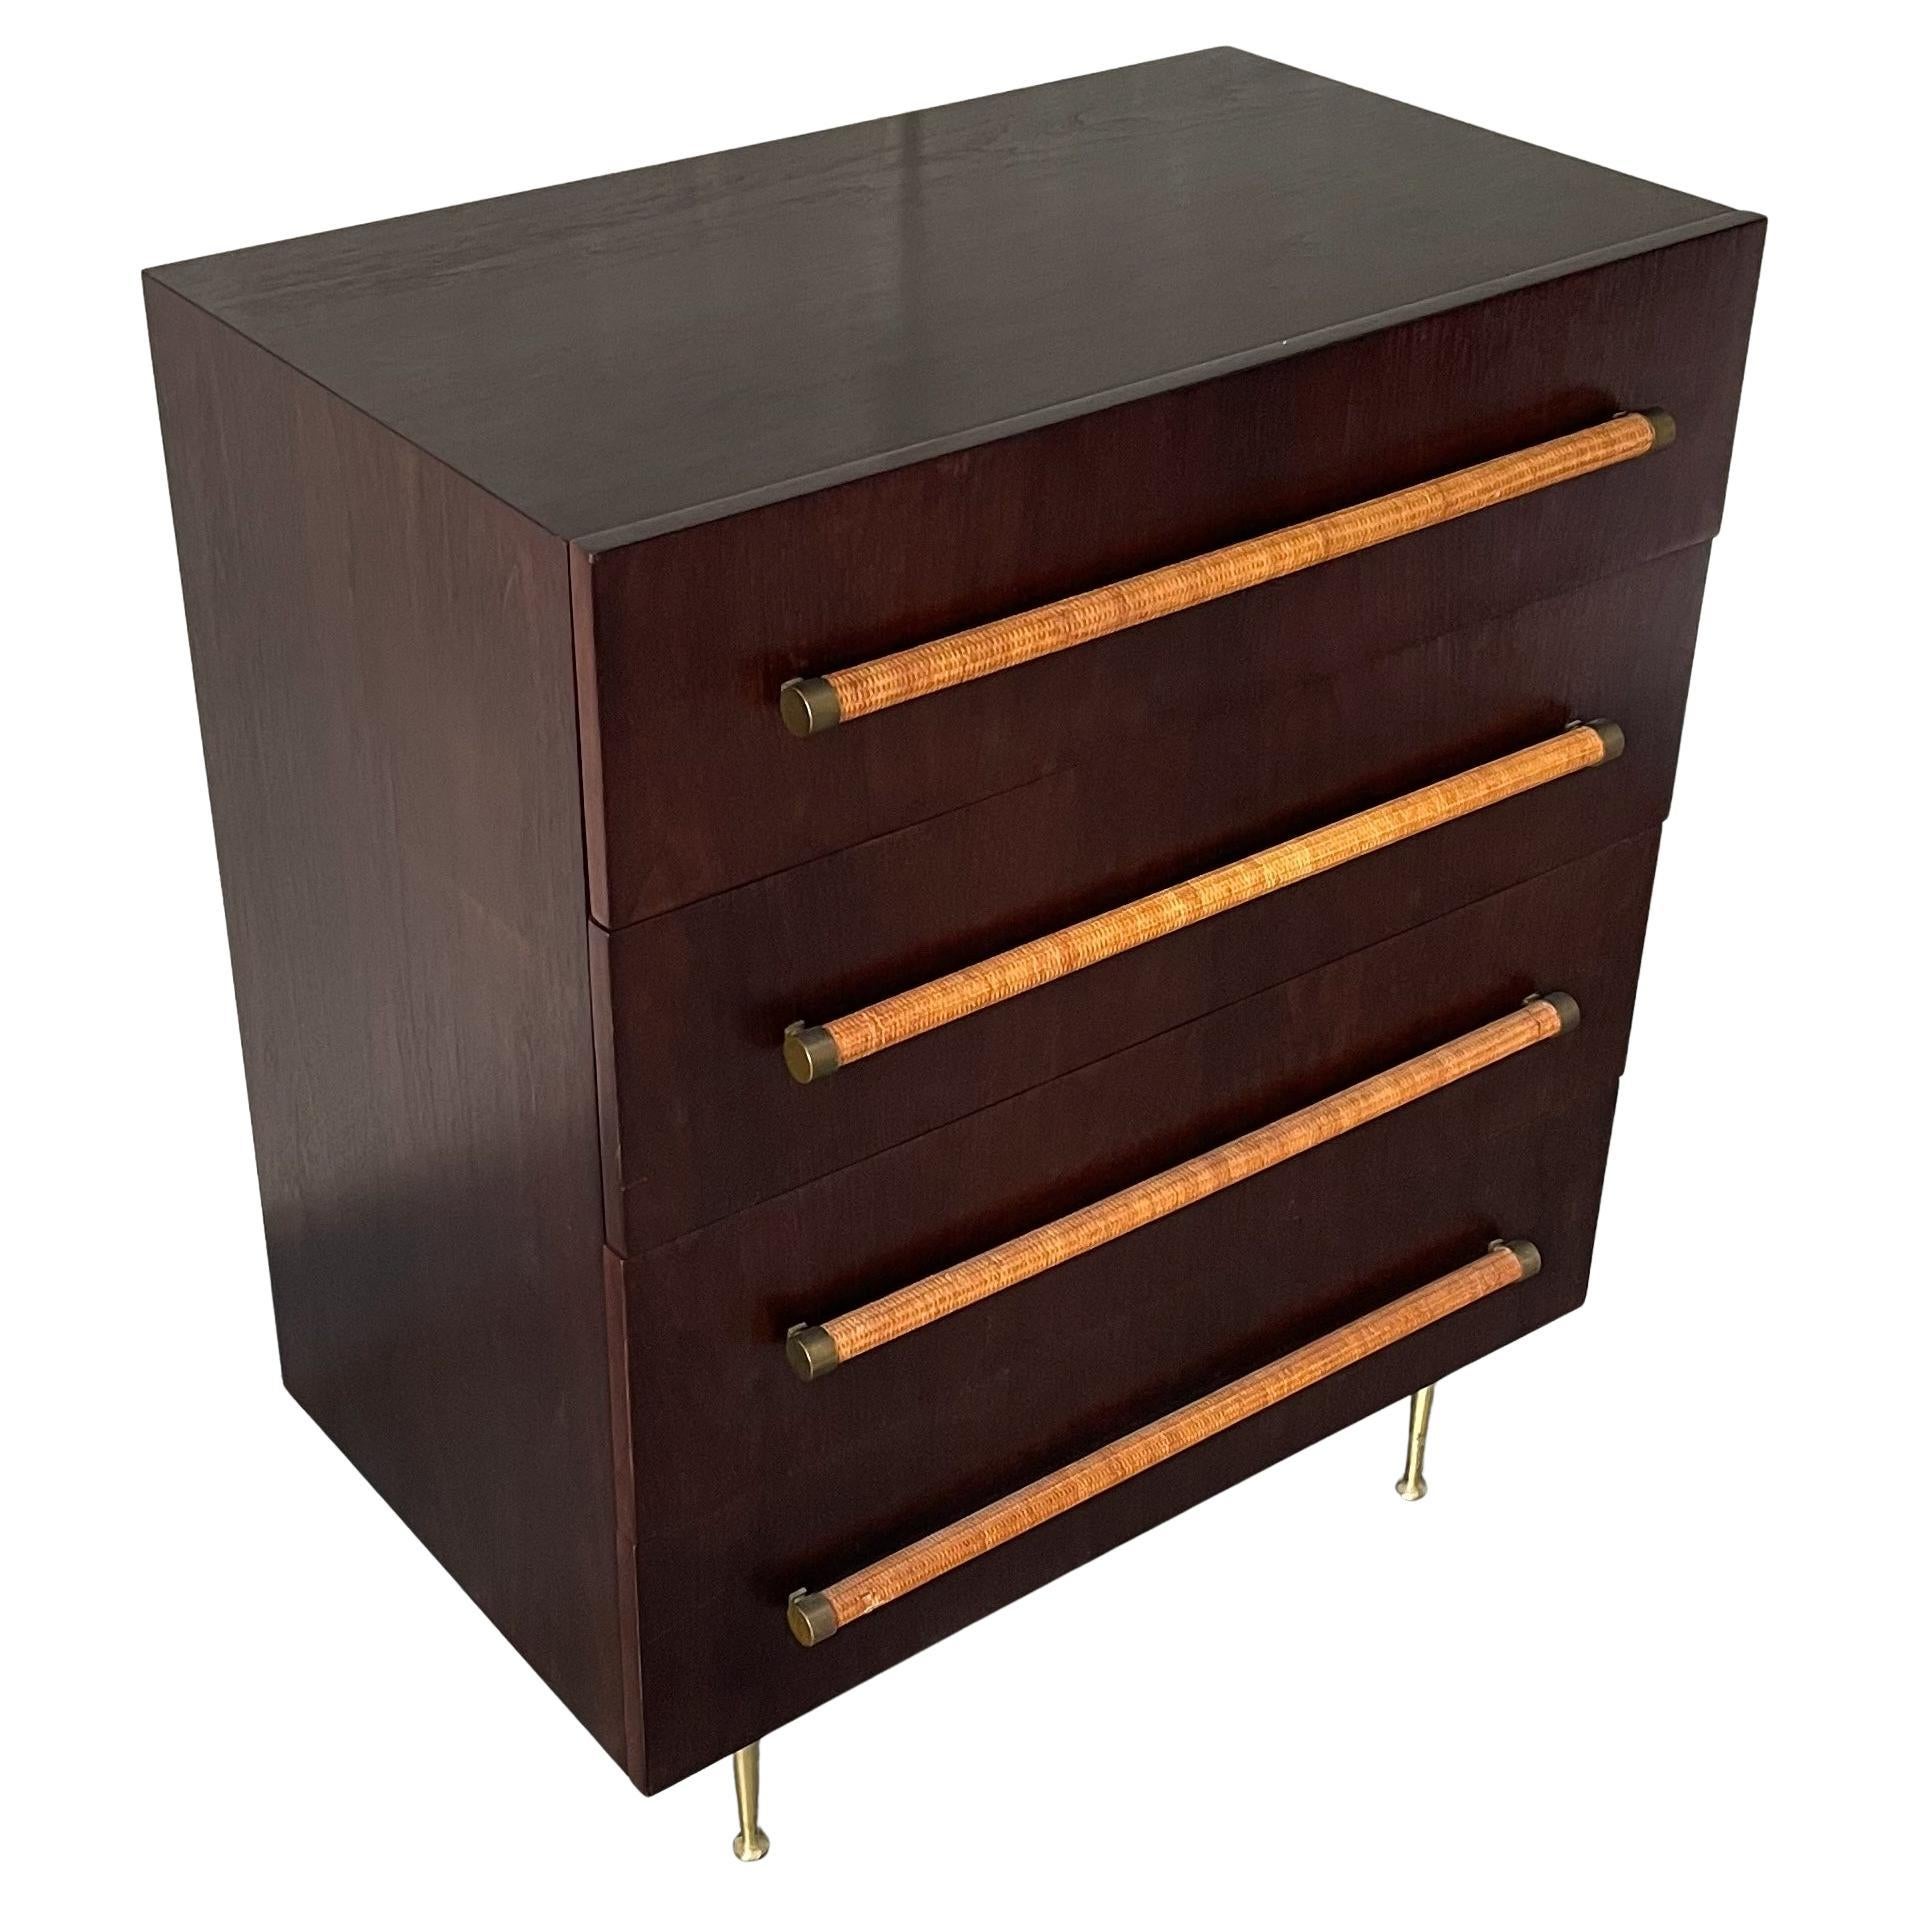 Widdicomb Furniture Co. Dressers